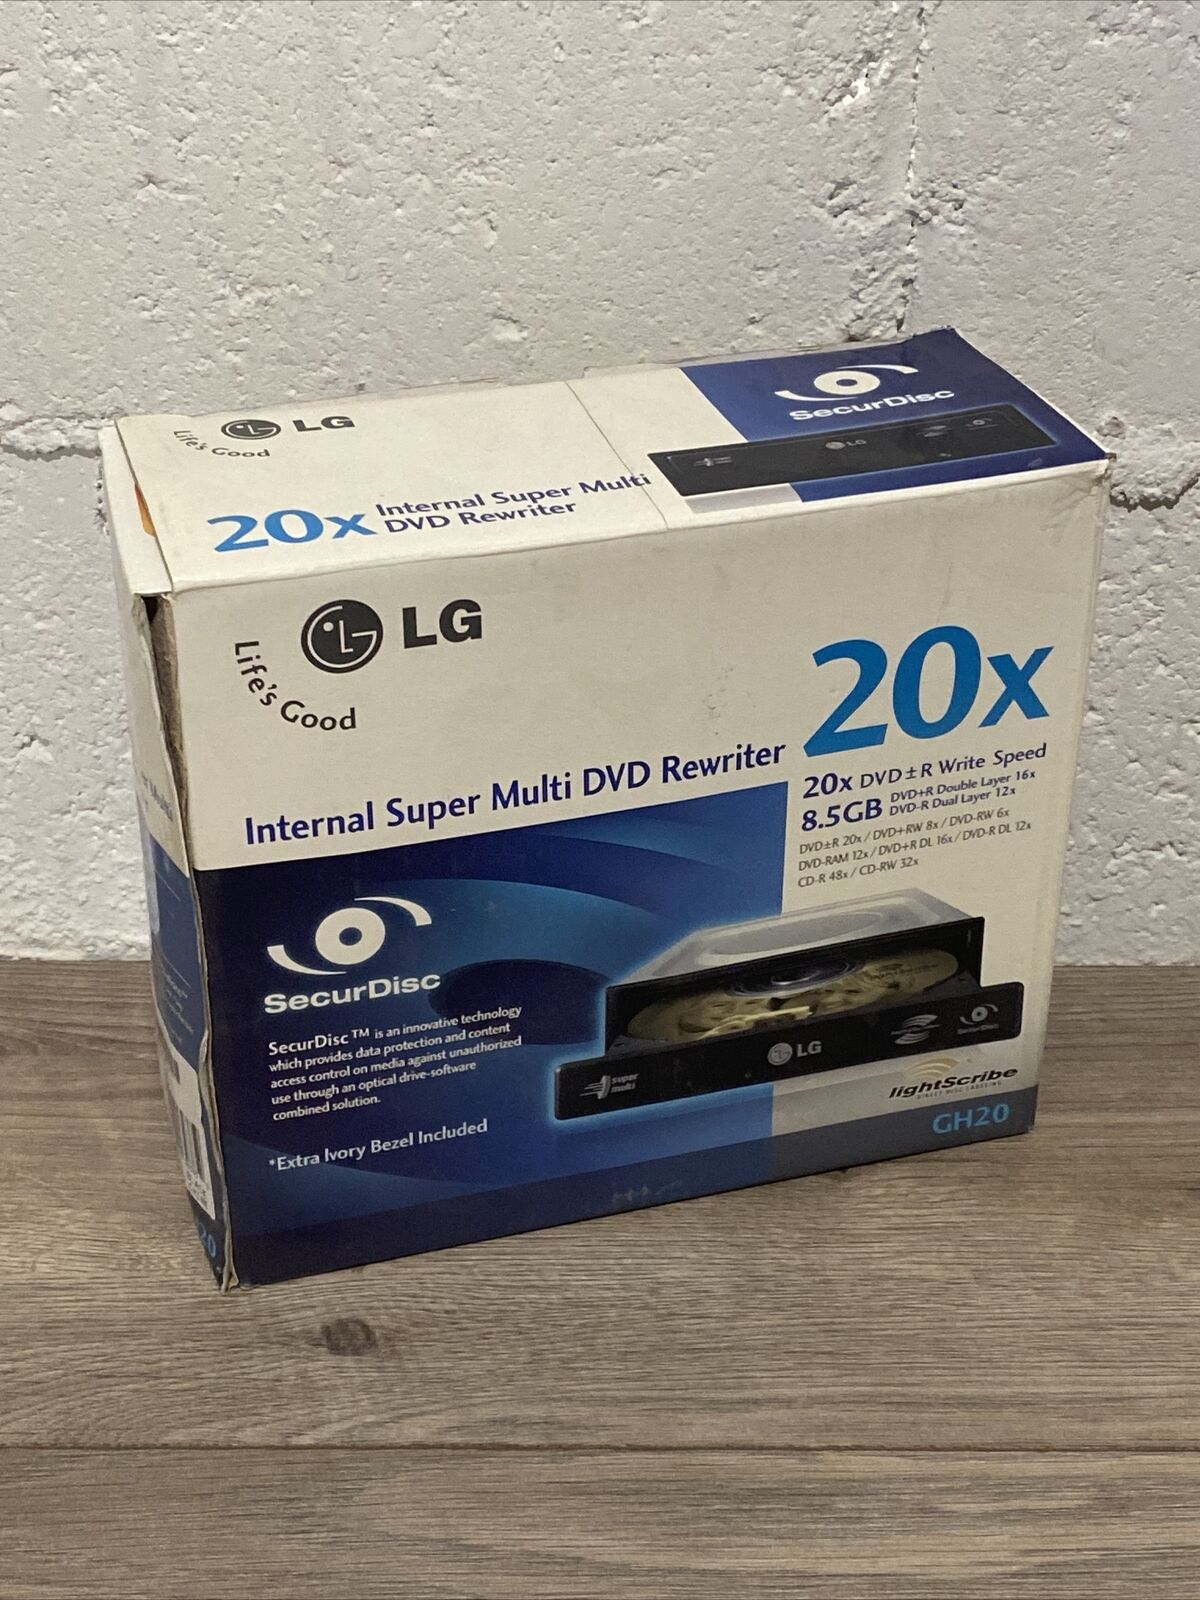 LG 20x GH20 Internal Super Multi DVD Rewriter